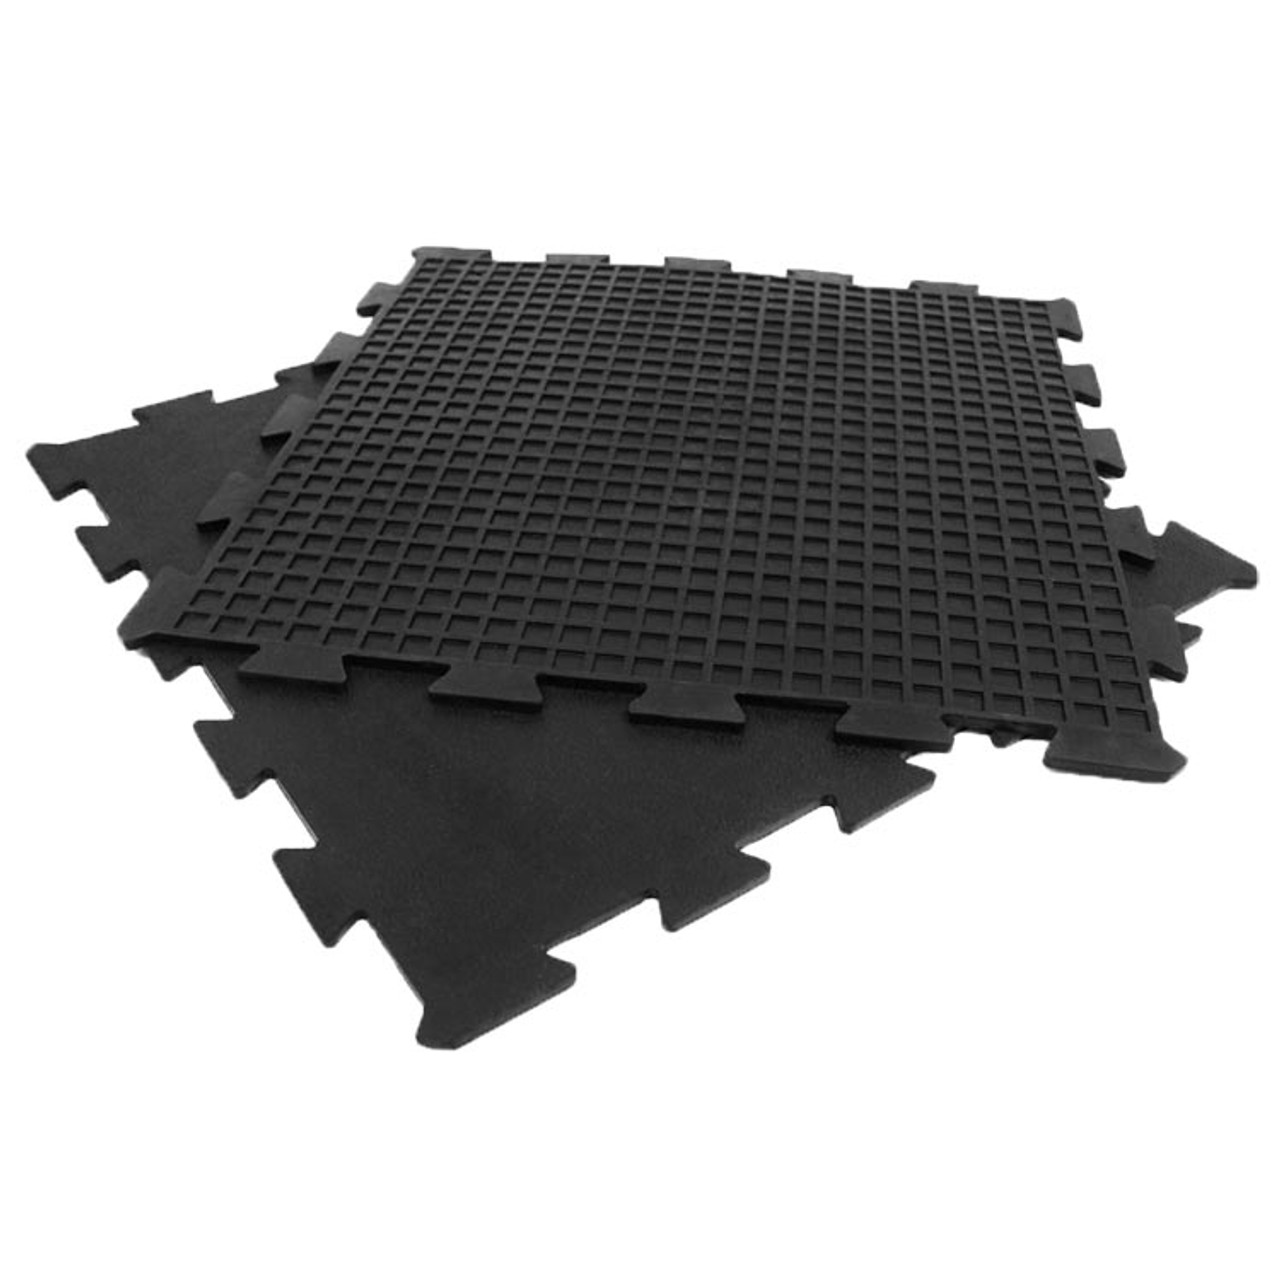 8mm Strong Rubber Tiles - Designer Series Gym Flooring